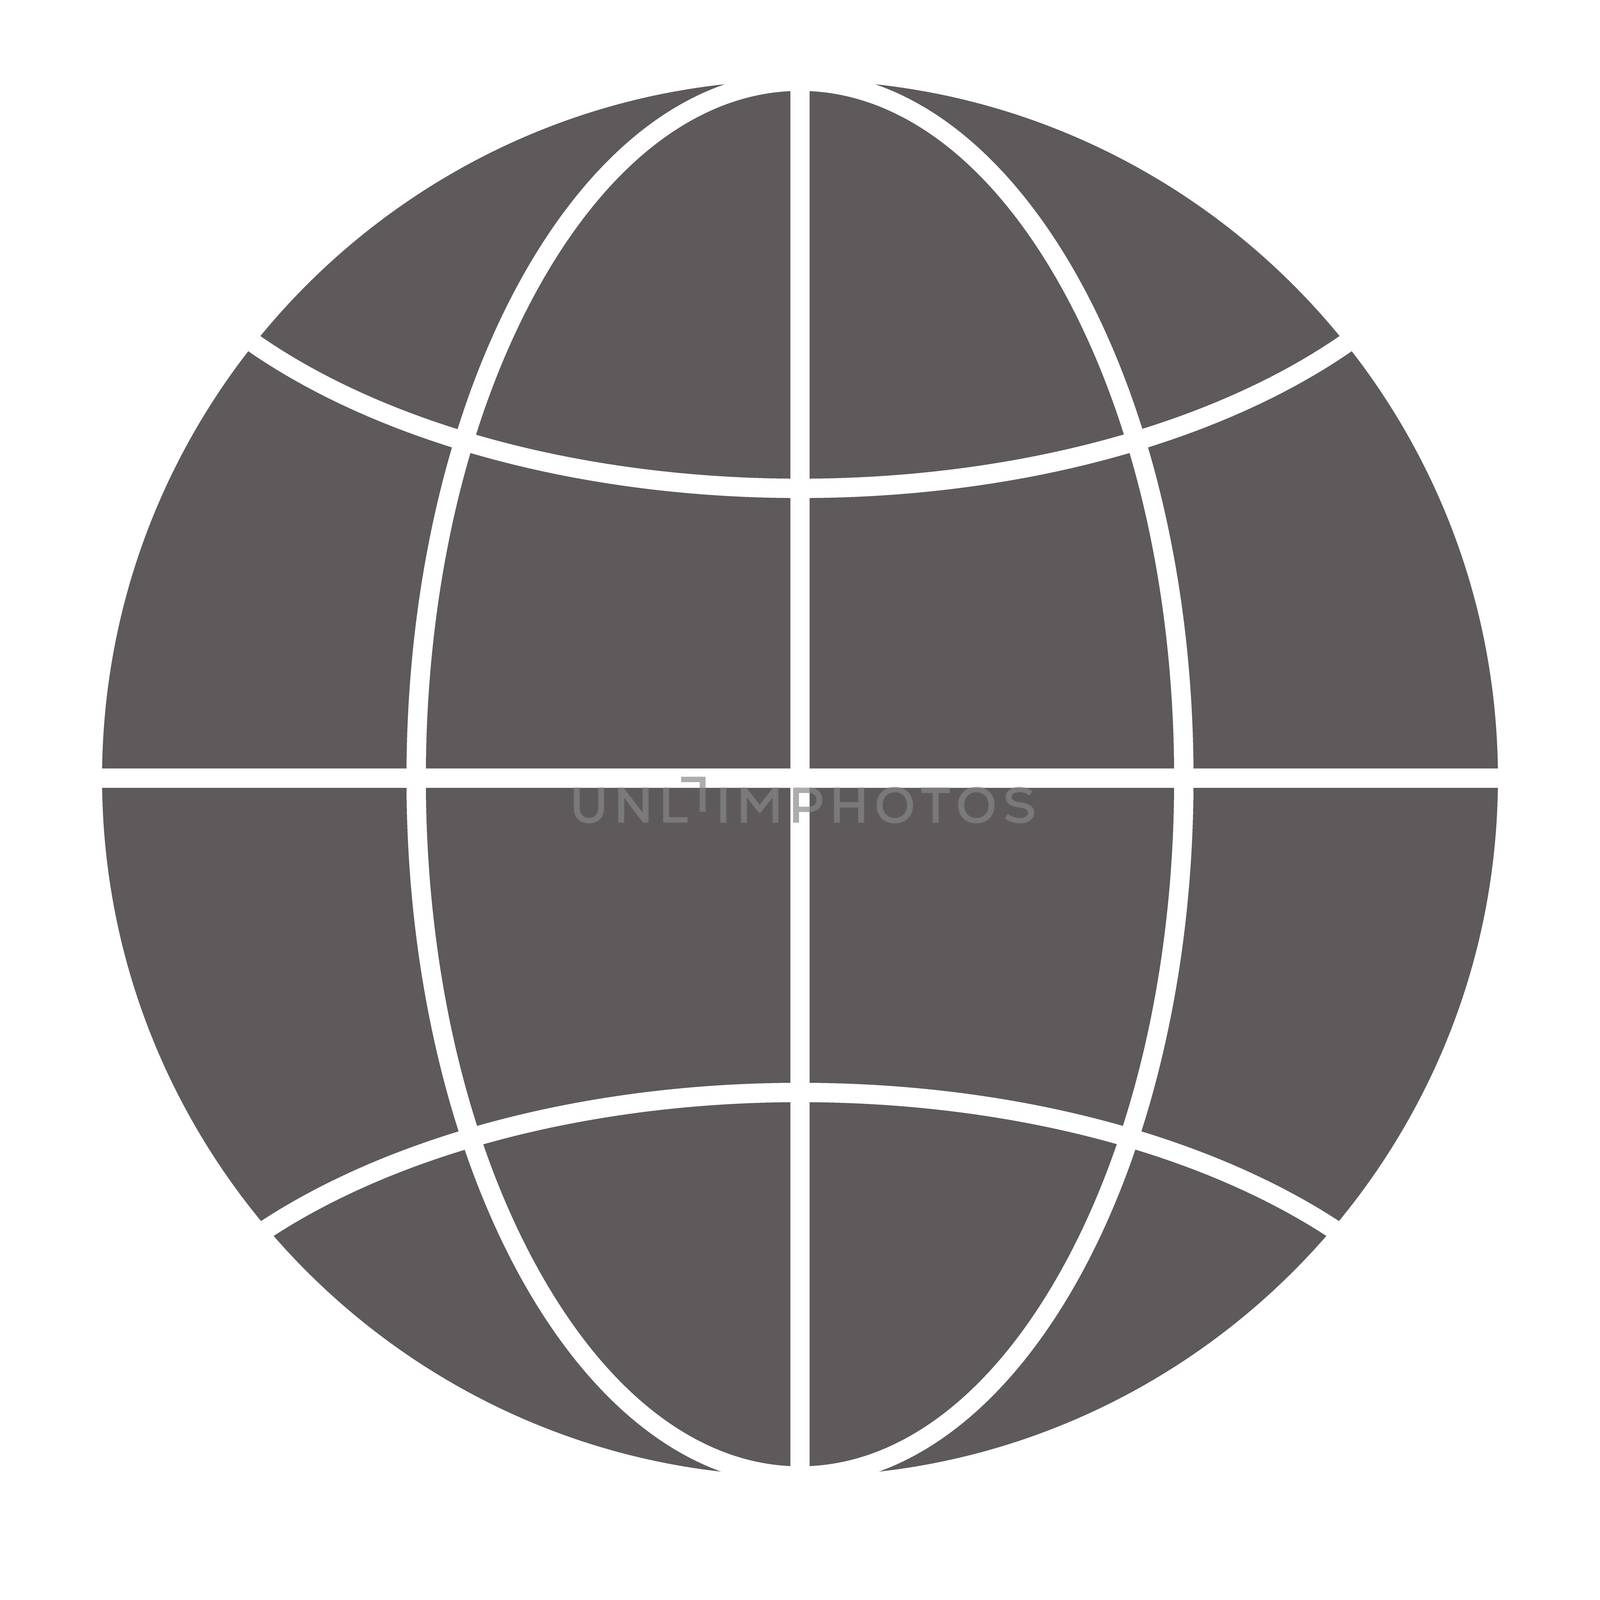 Globe icon on white background. flat style. Globe icon for your web site design, logo, app, UI. Globe symbol.